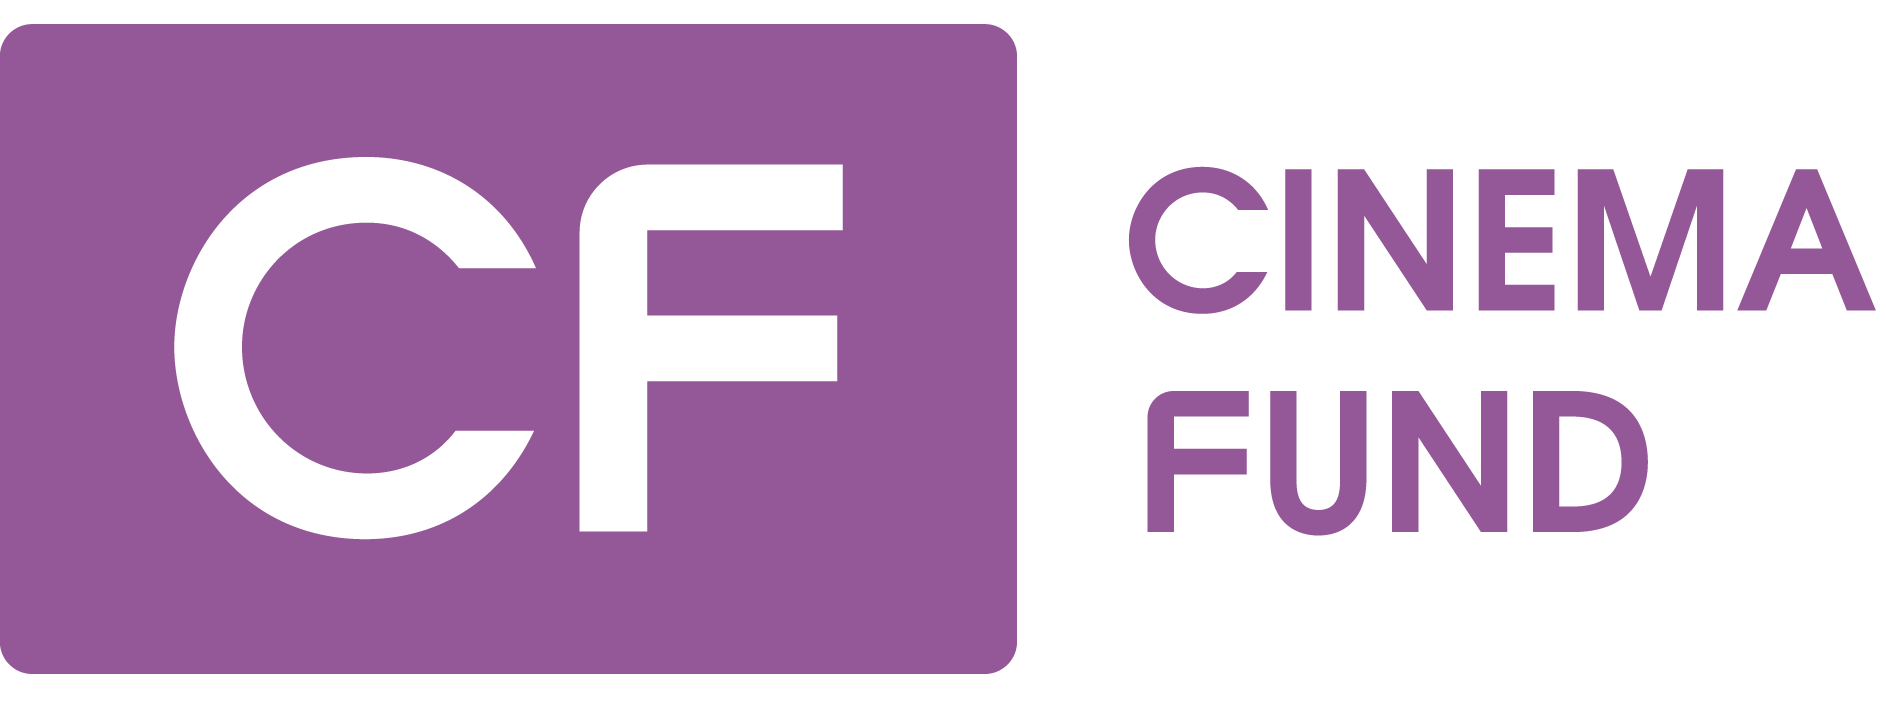 Cinema Fund Logo